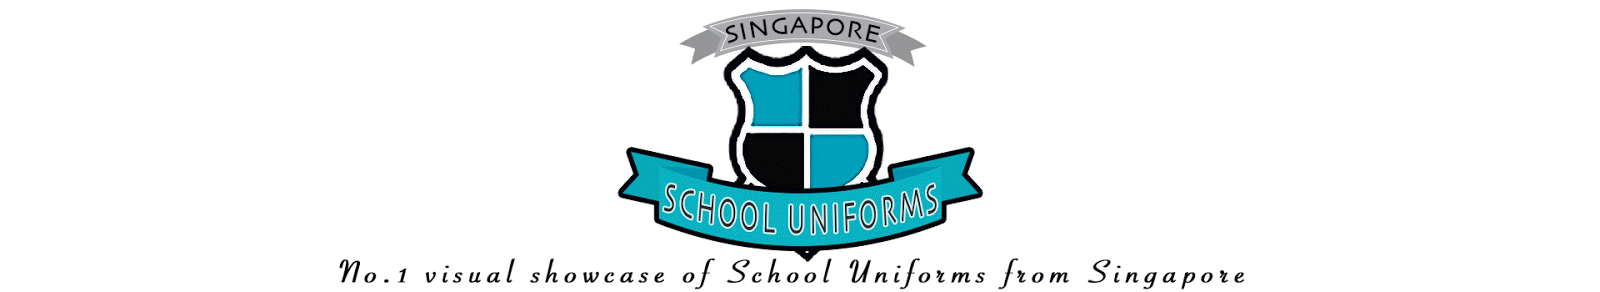 SSU Singapore School Uniforms